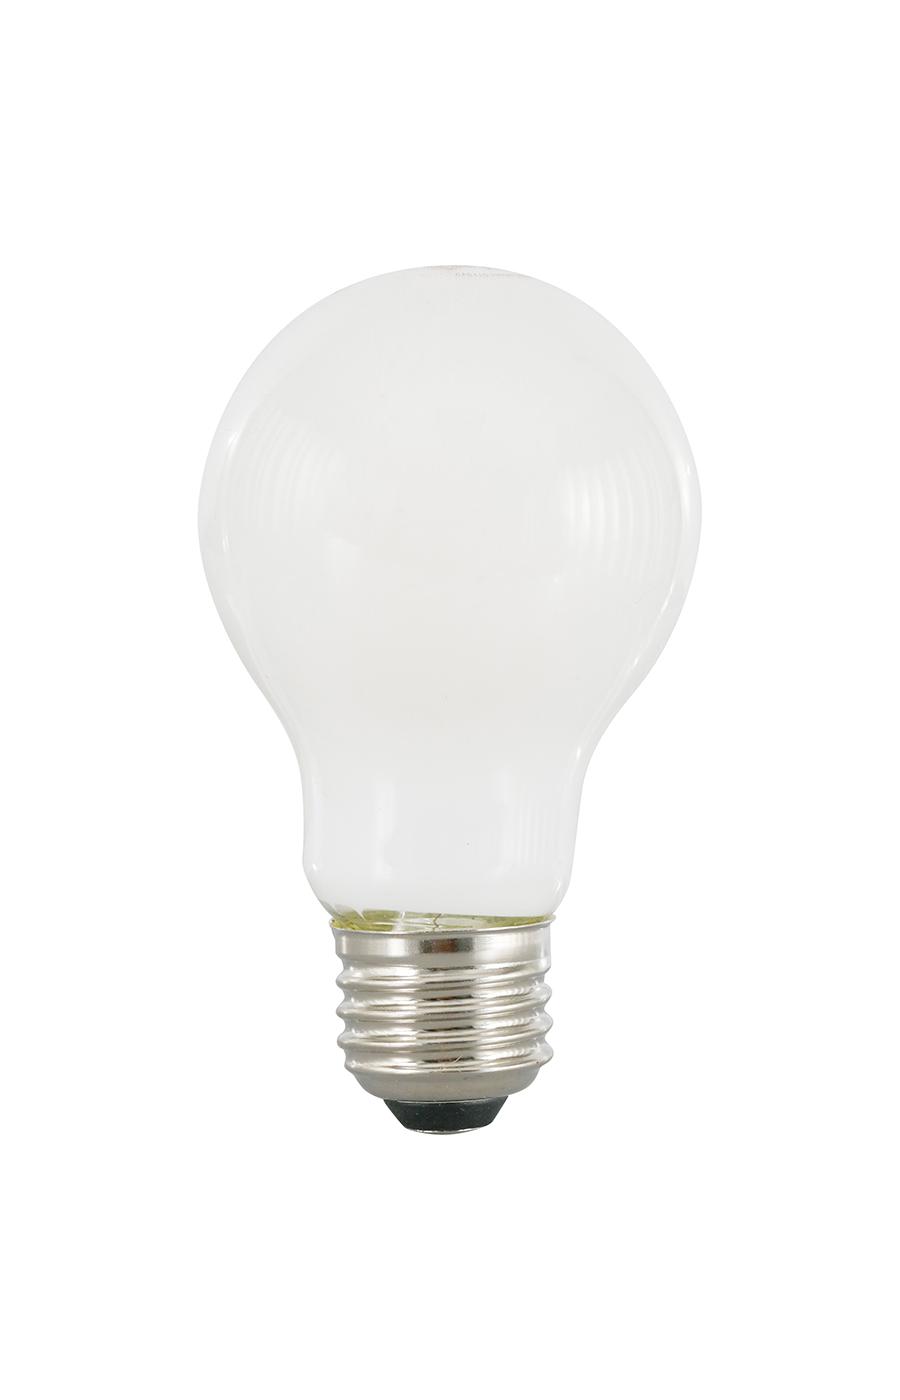 Sylvania TruWave A19 60-Watt Frosted LED Light Bulbs - Soft White; image 2 of 2